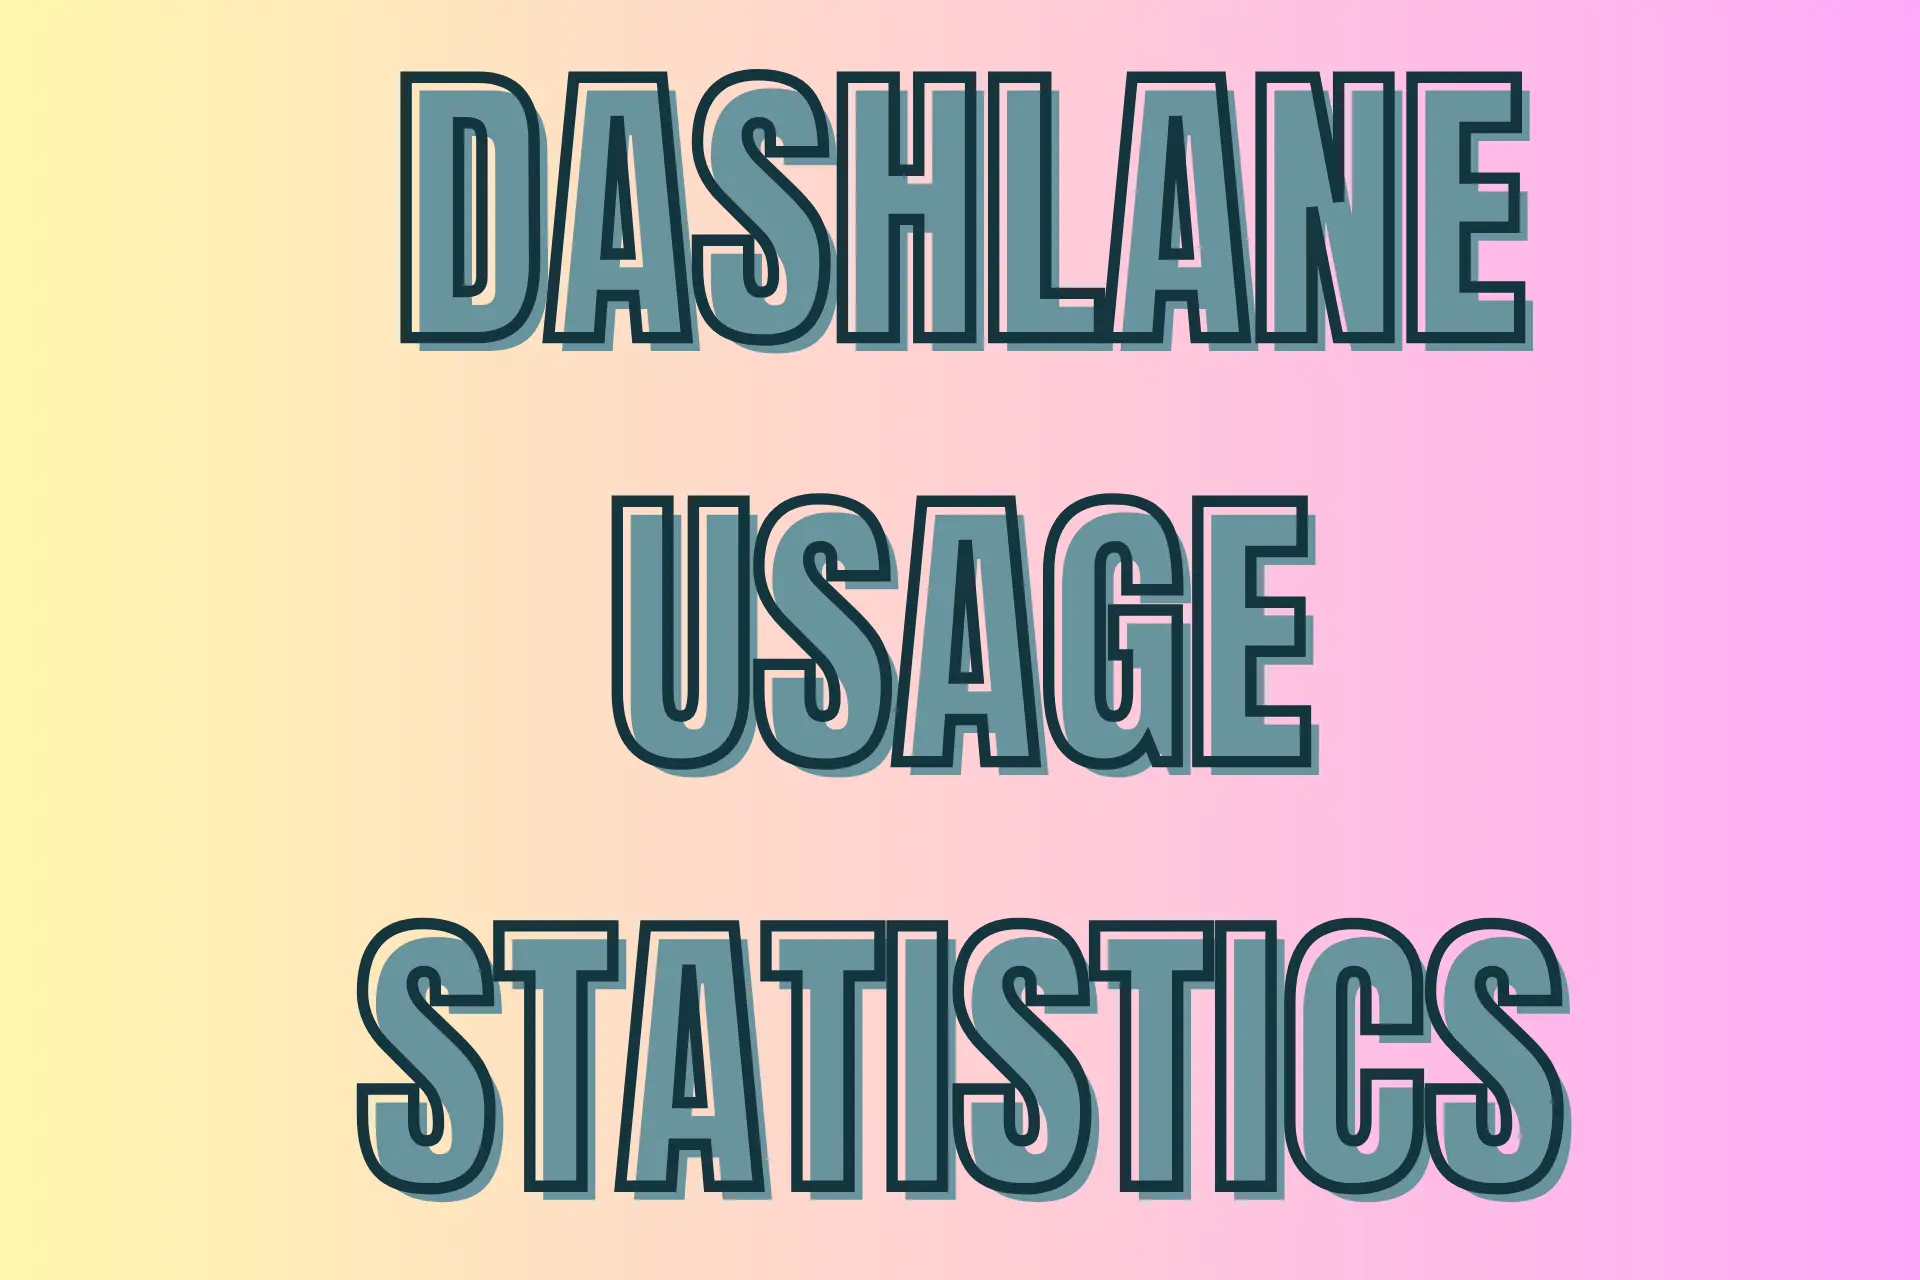 Dashlane usage statistics